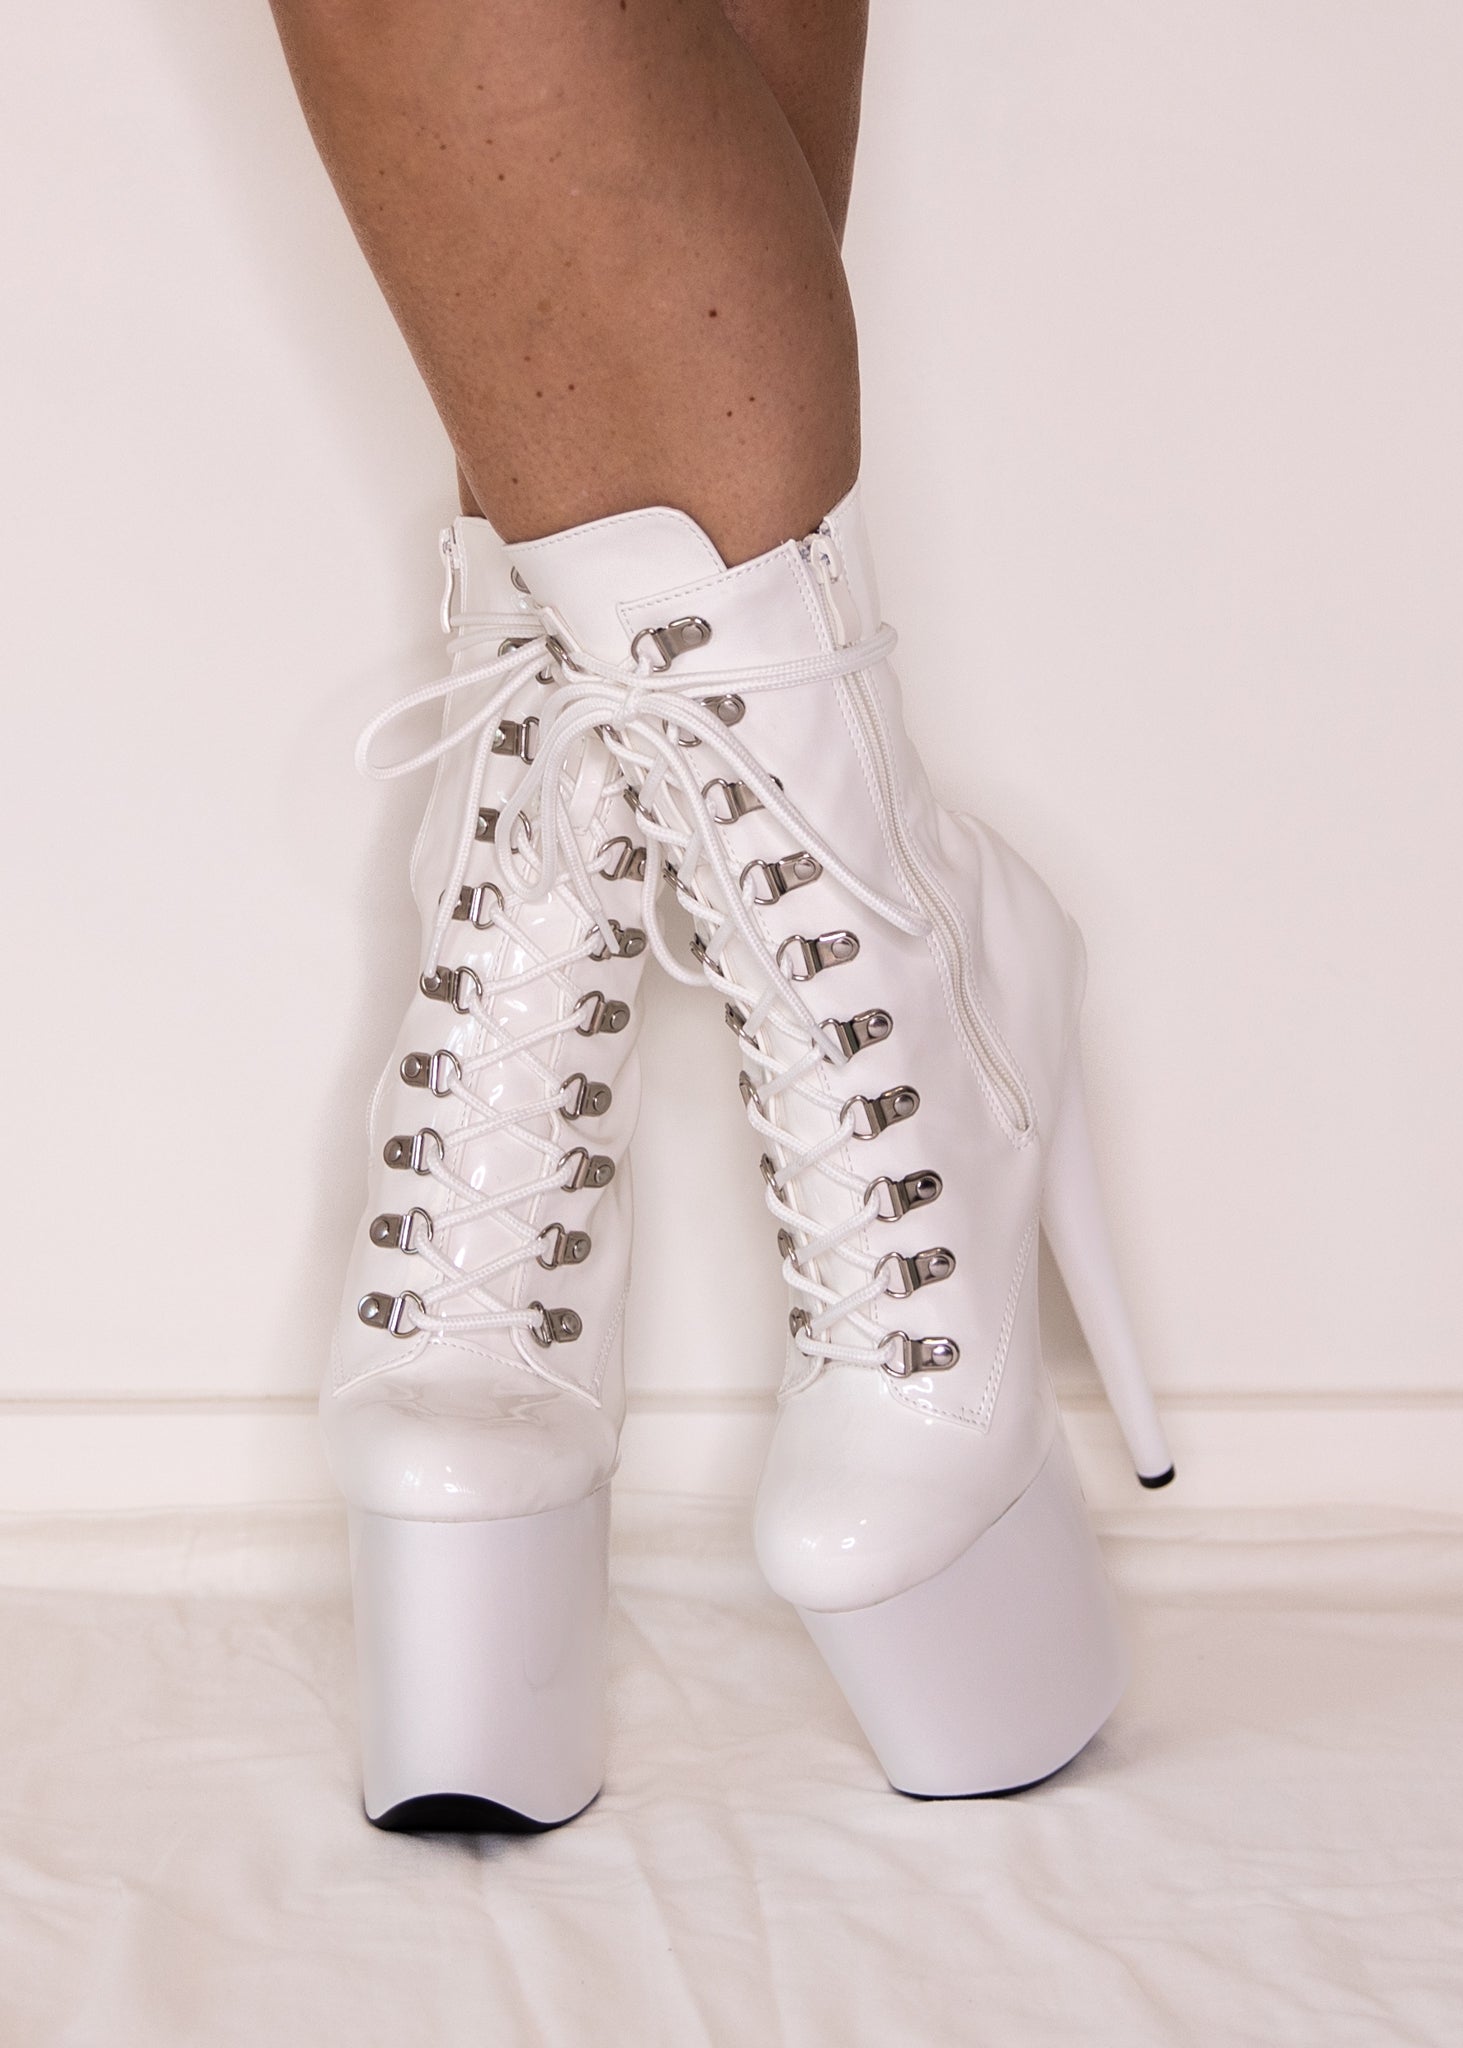 White 8 Inch Boots - Sky High Heels Australia